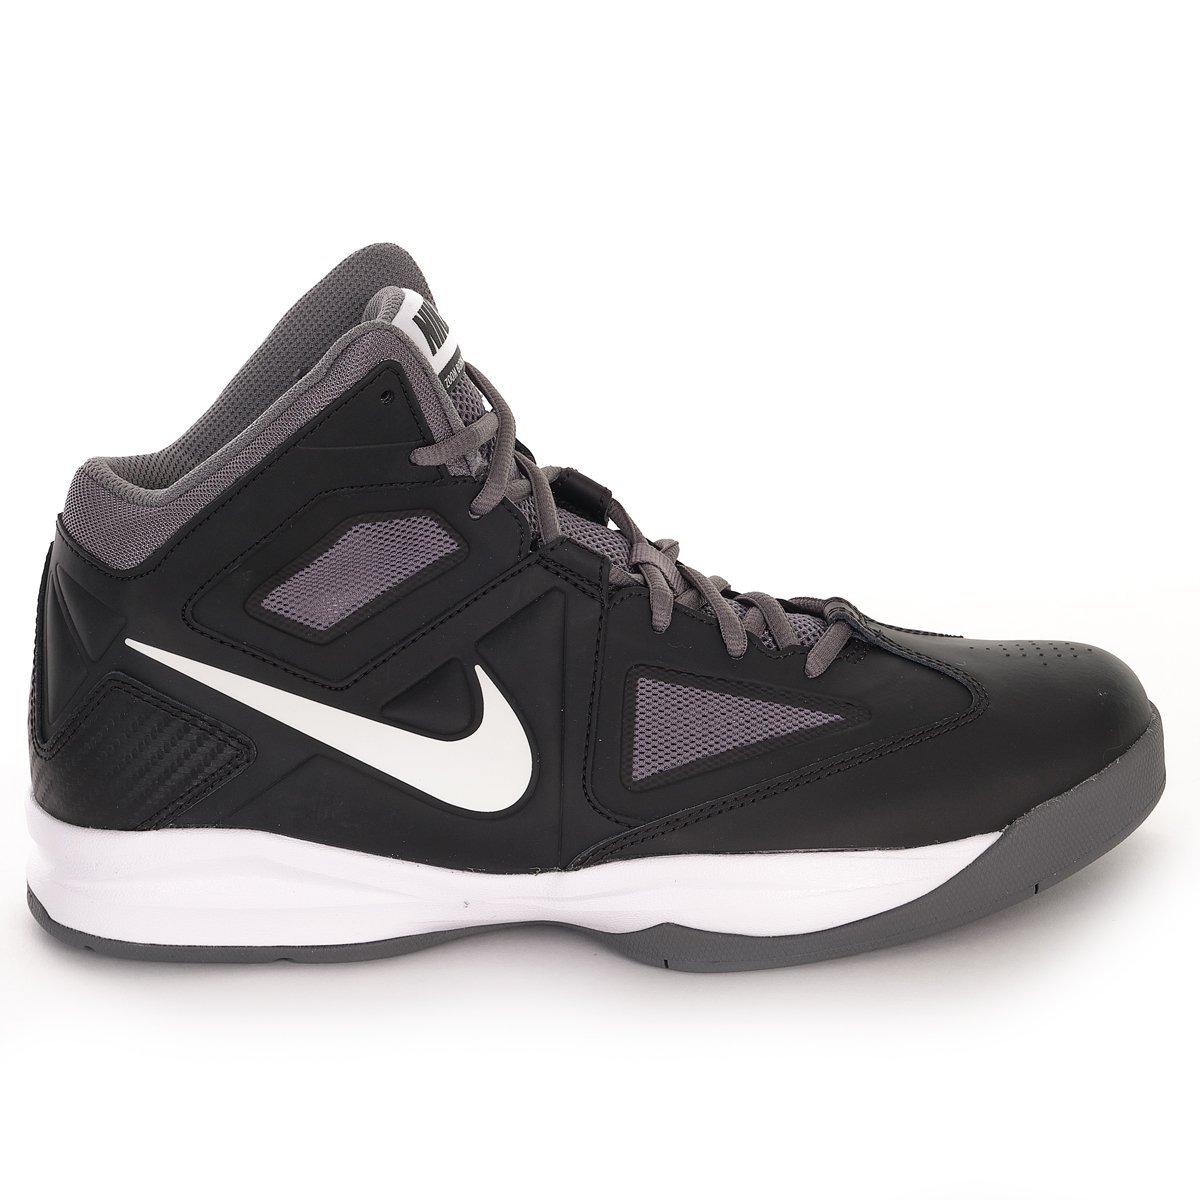 Obuv Nike Basket M - black